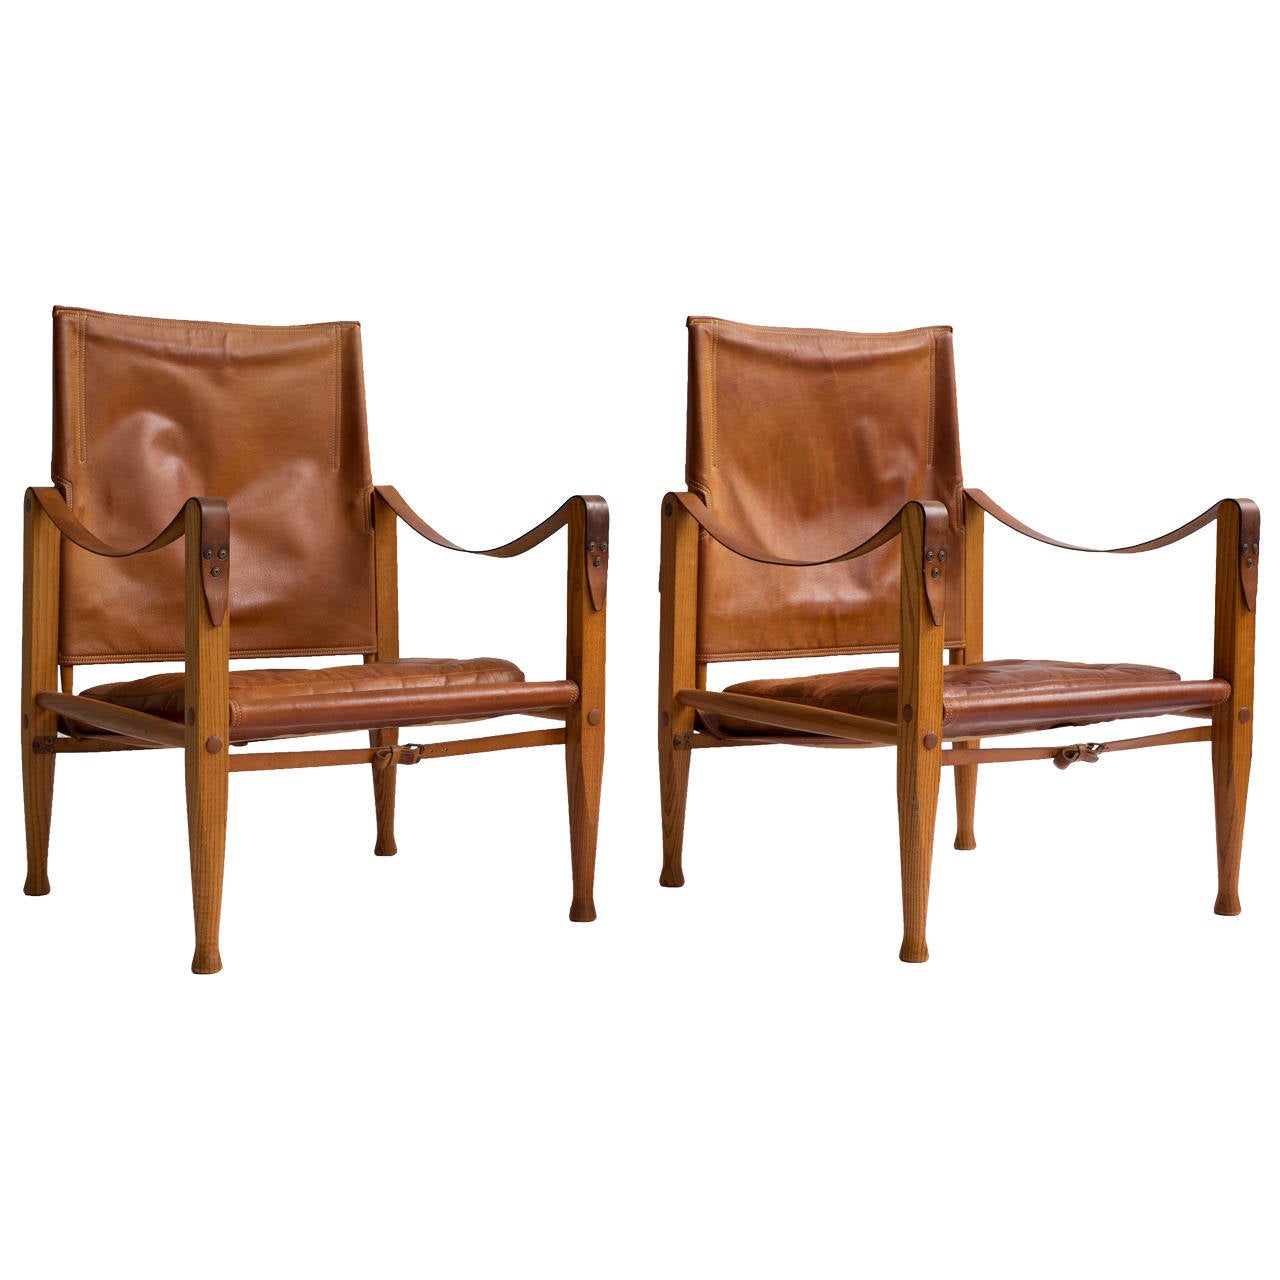 Pair of Kaare Klint Safari chairs for Rud Rasmussen, 1933